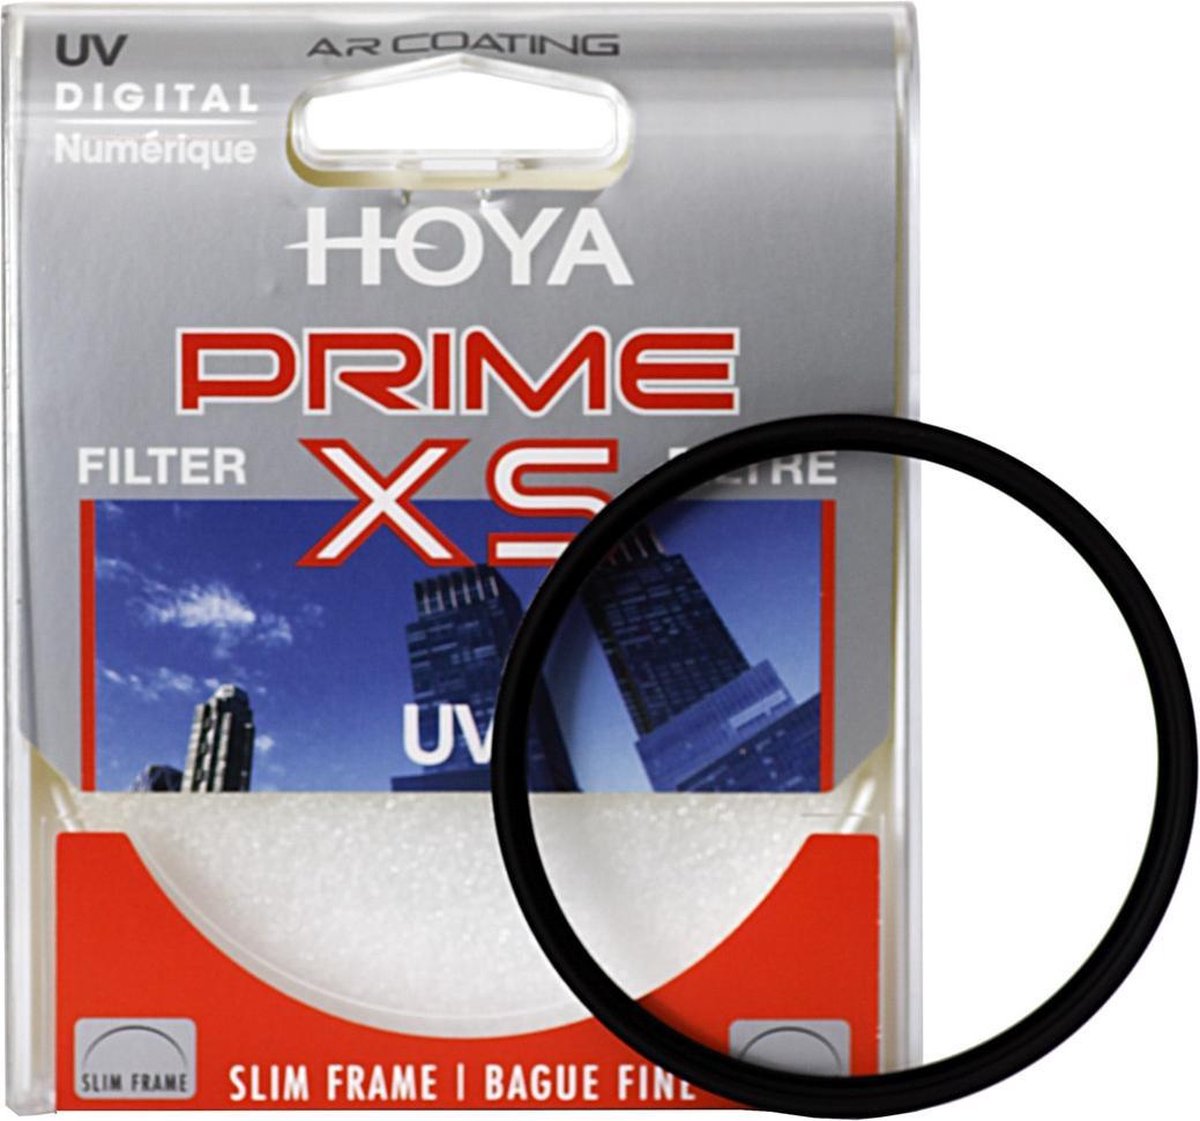 Hoya PrimeXS MultiCoated UV Filter - 77mm - Hoya